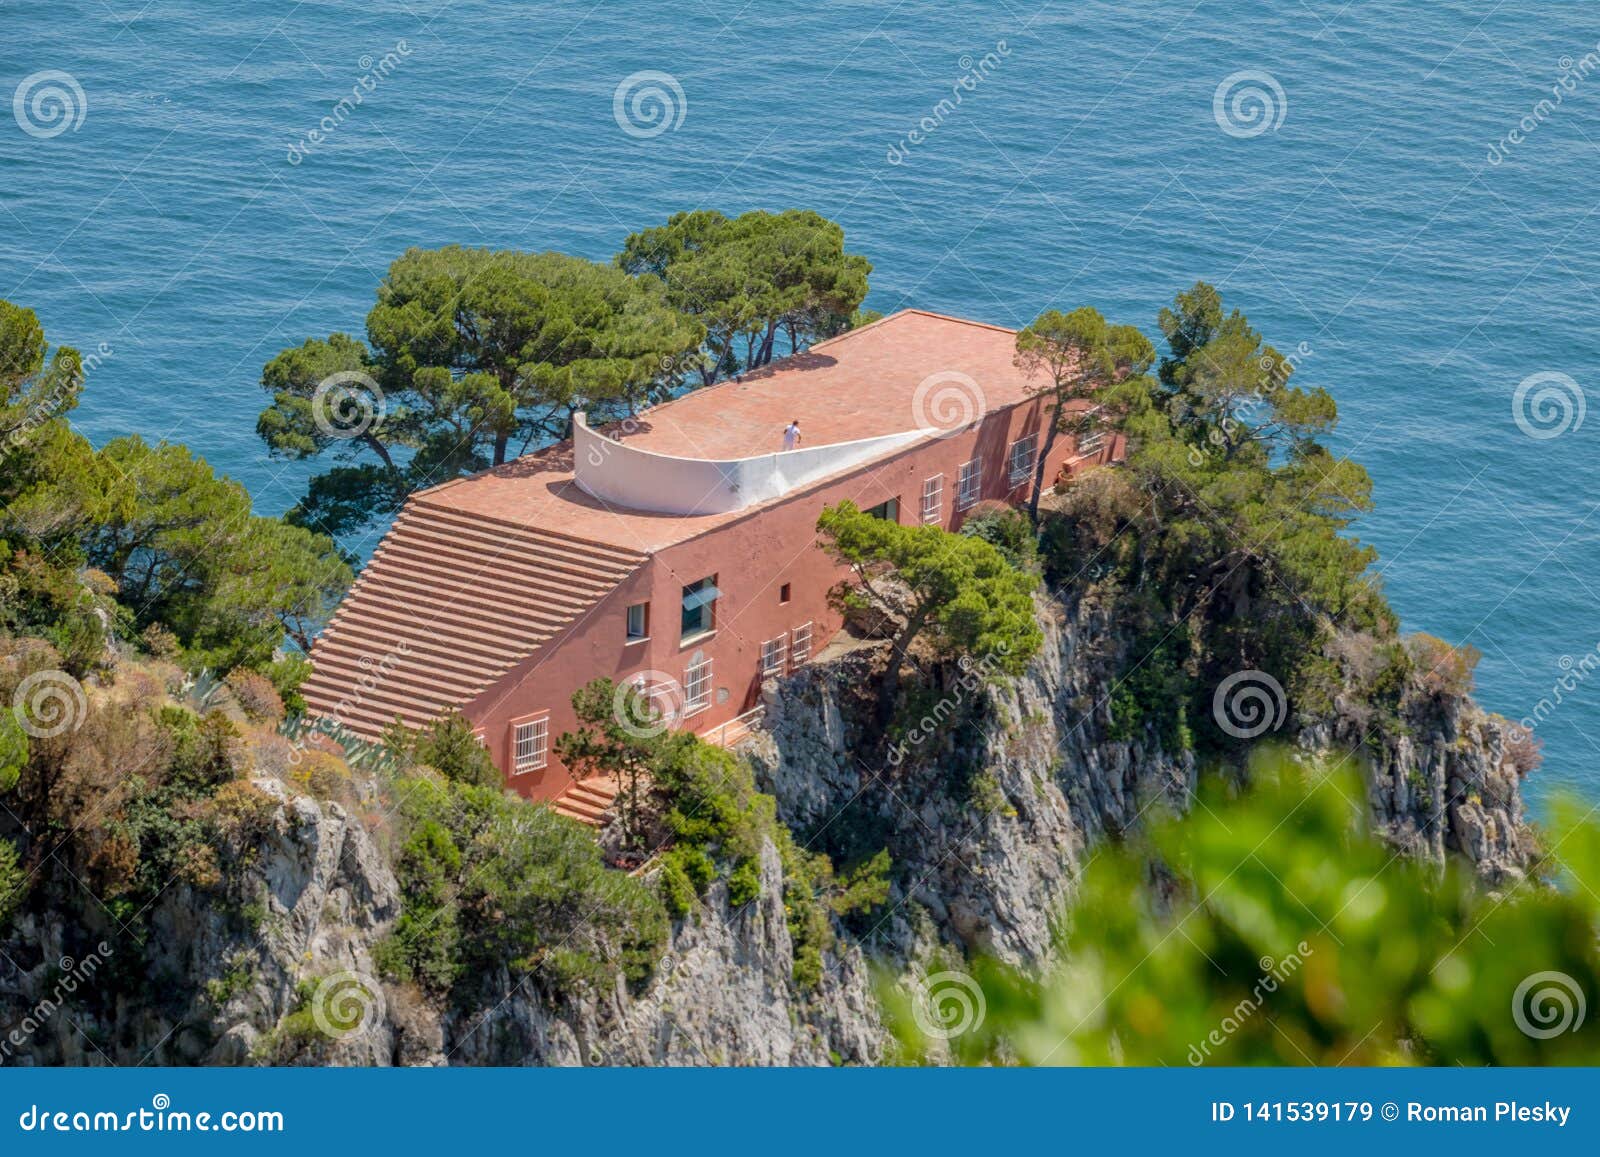 The Famous Villa Malaparte On The Island Of Capri Italy Stock Image Image Of Magazine Outdoor